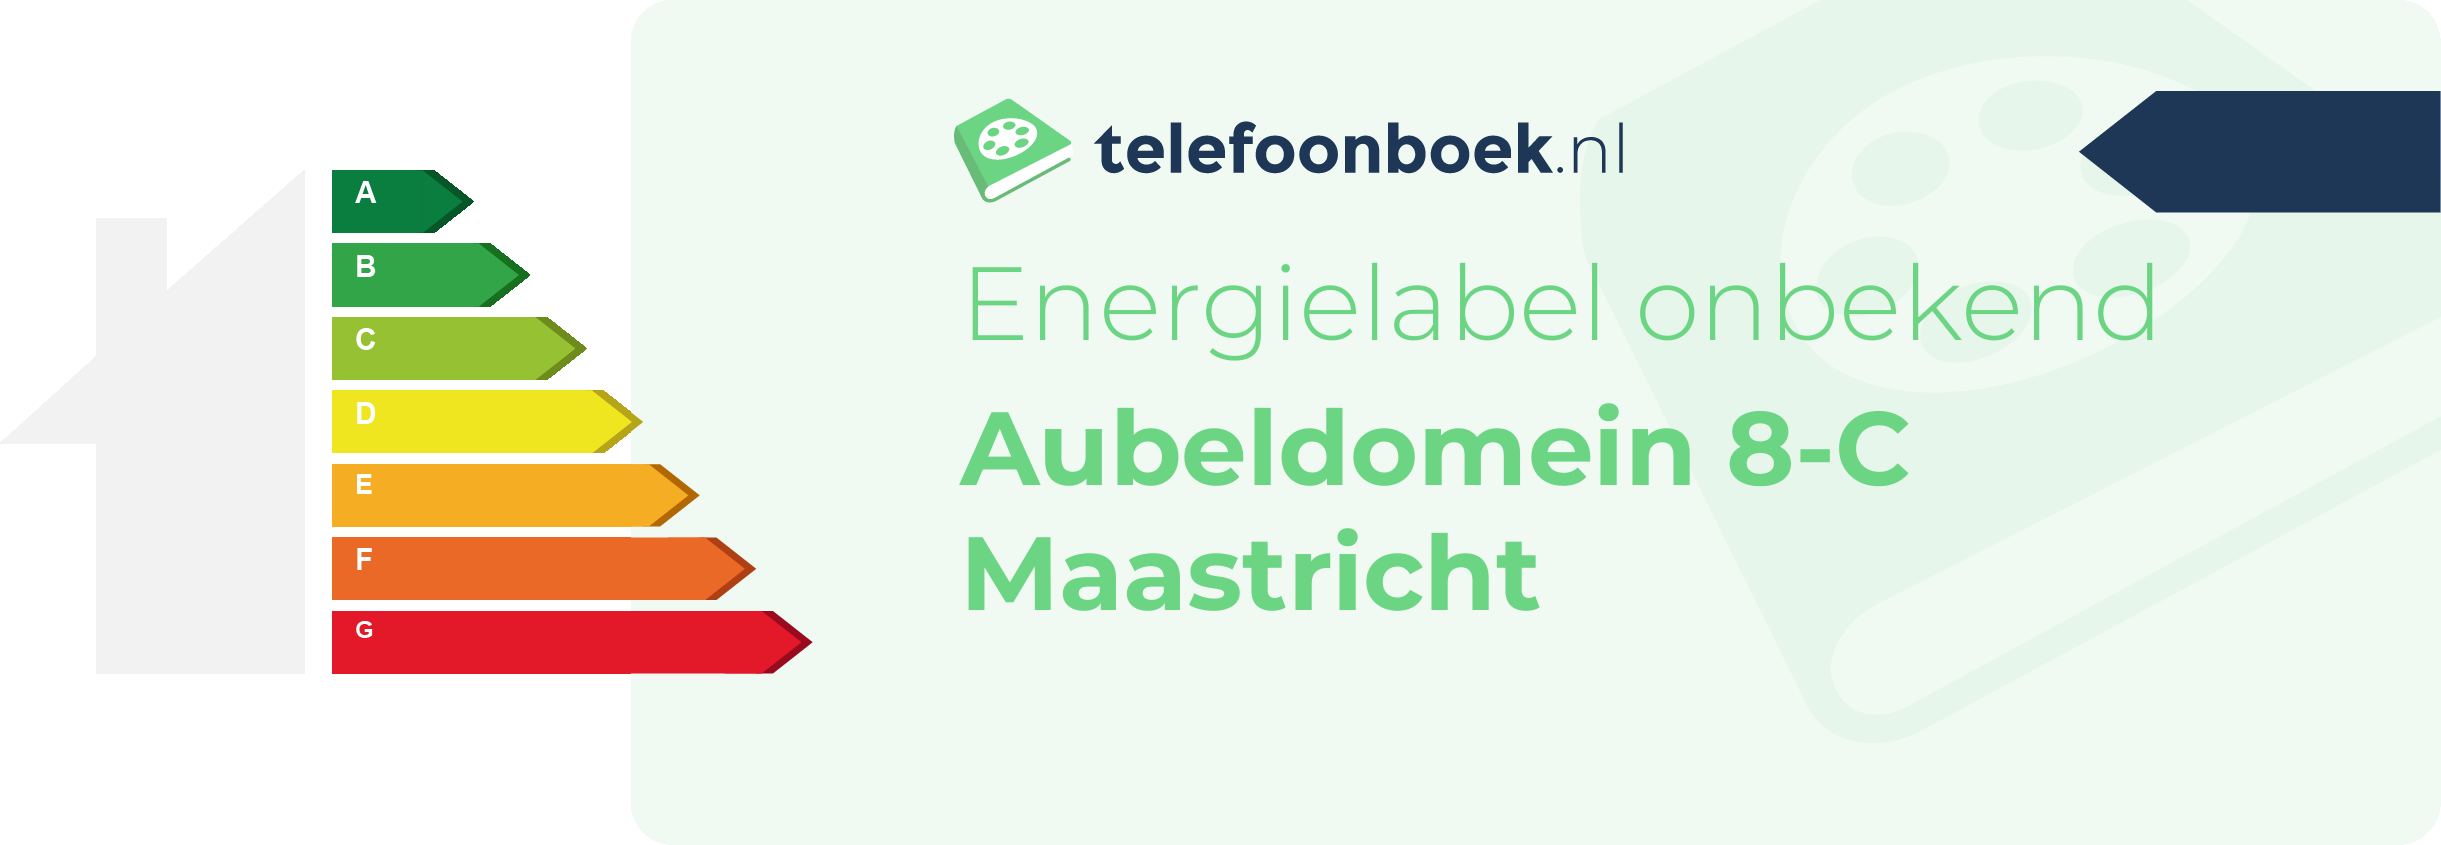 Energielabel Aubeldomein 8-C Maastricht